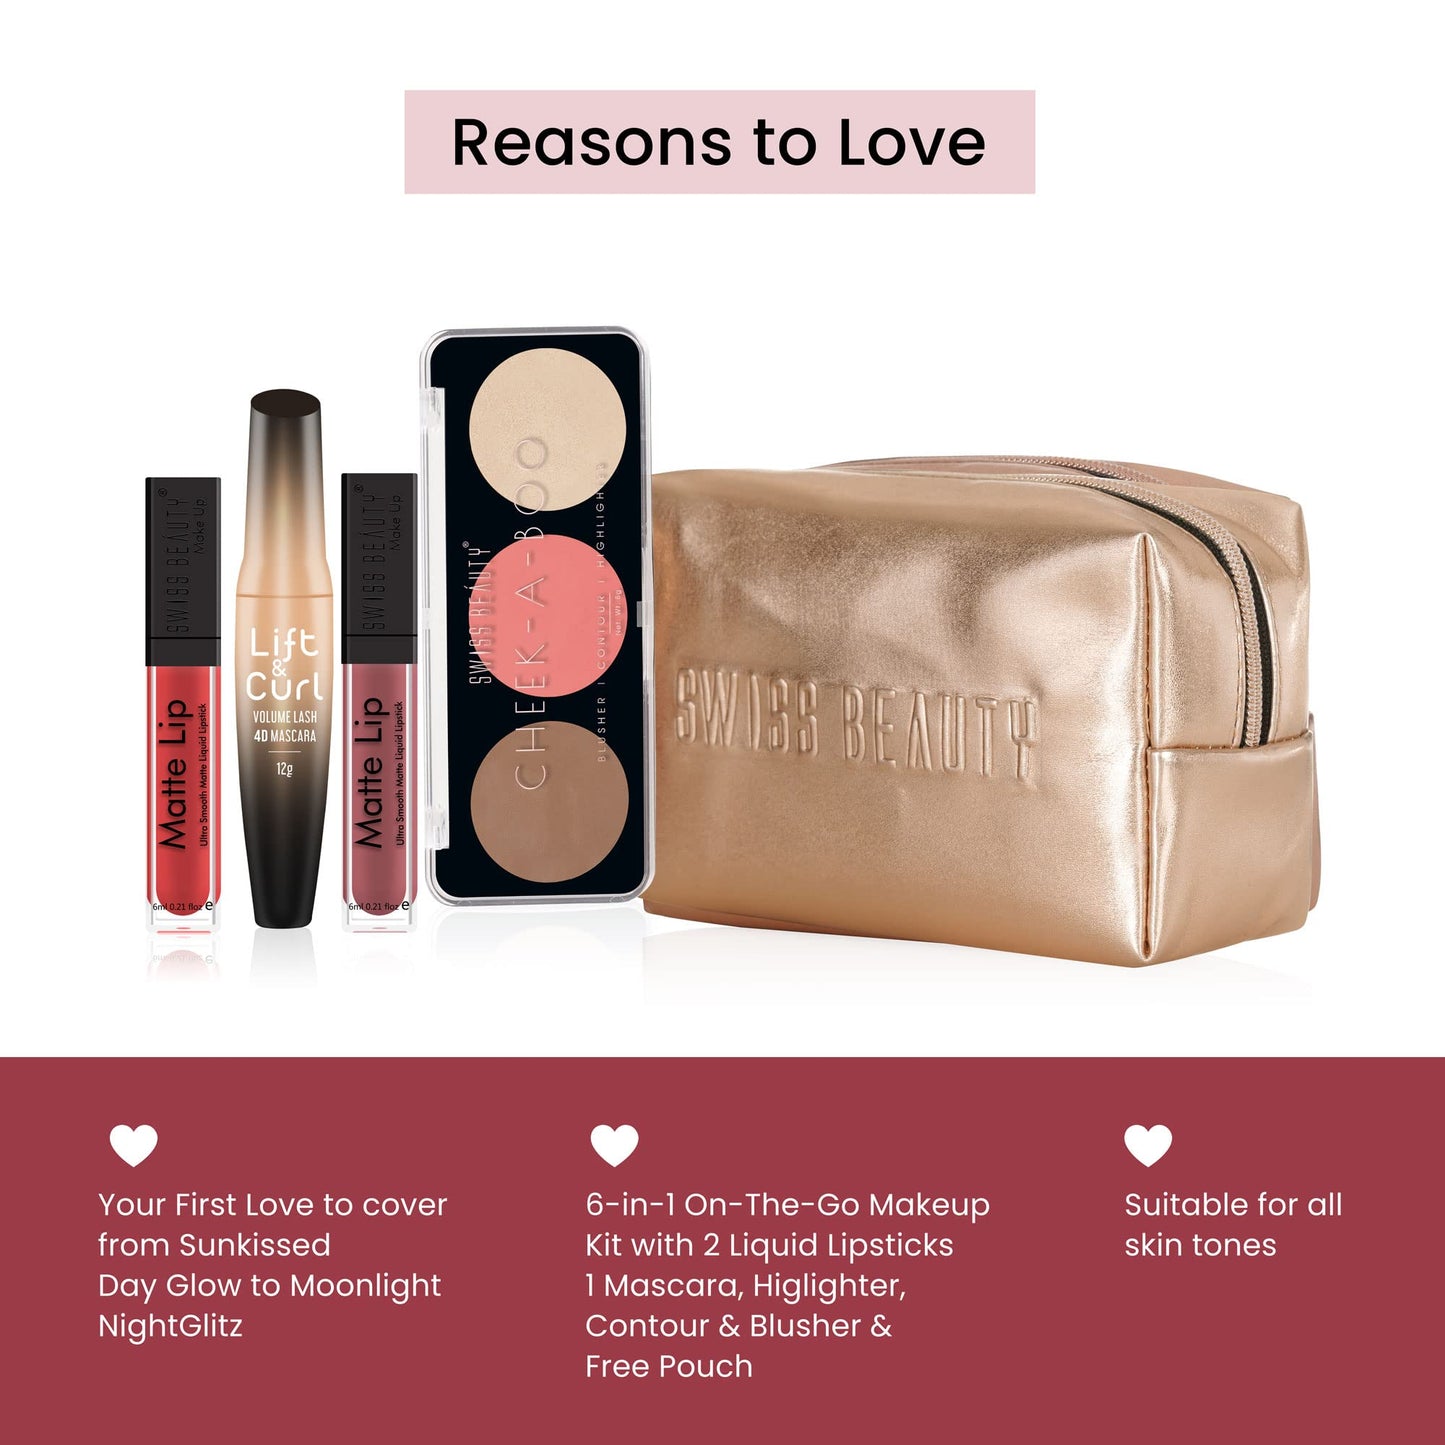 Swiss Beauty Love All Makeup Kit | 2 Waterproof Lipsticks, Volumizing & Curling Mascara, 3-In-1 Face Palette with Bronzer, Highlighter and Blush| Makeup Gift Set